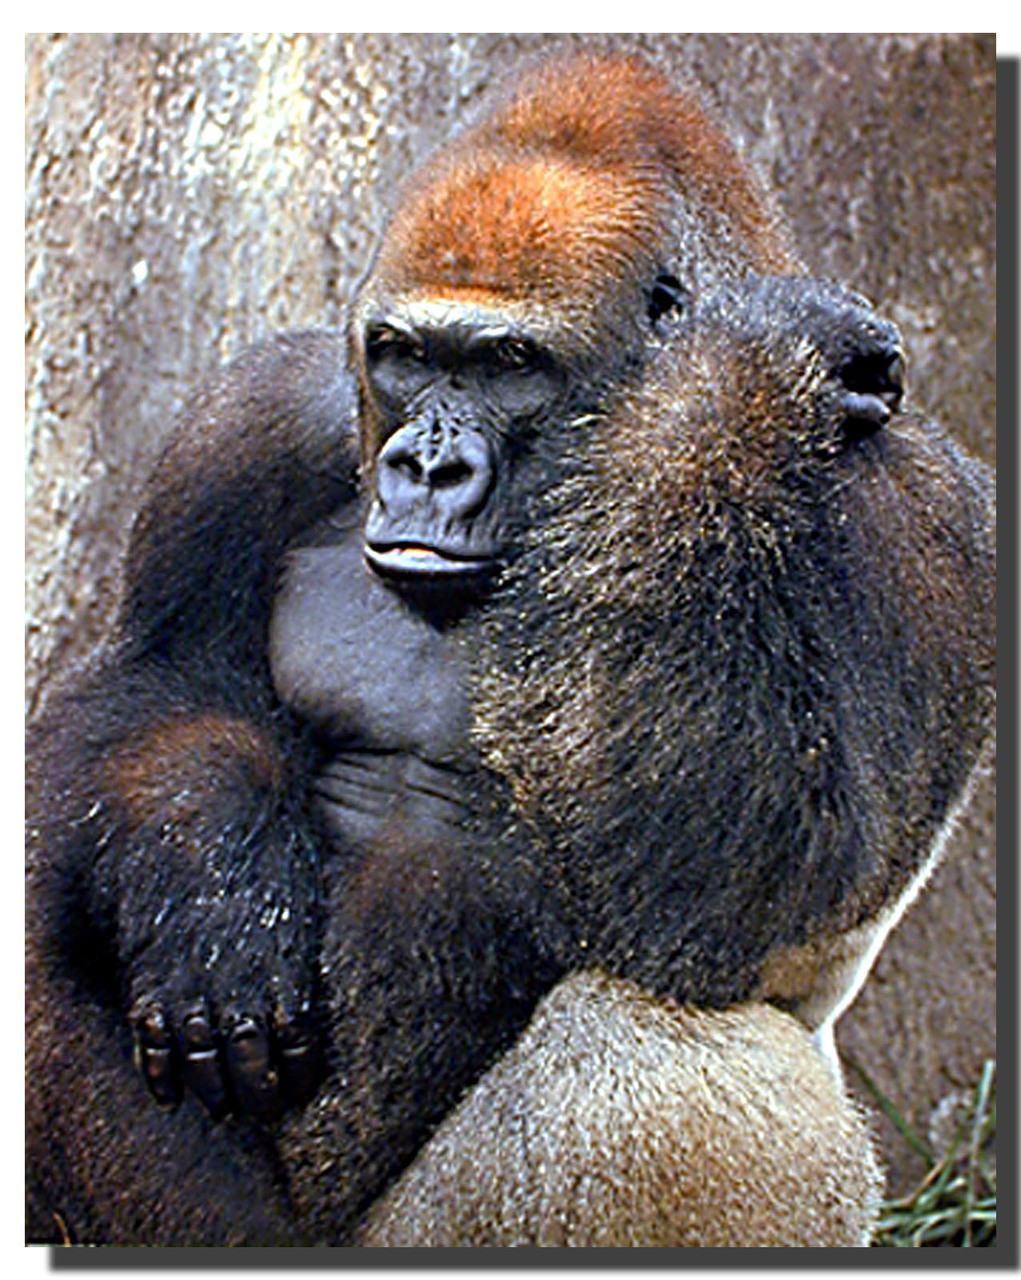 Latitude Run® Little Girl Offering Banana To Gorilla Pictures Of Gorillas  Poster Primate Poster Gorilla Picture Paintings For Living Room Decor  Nature Wildlife Art Print Black Wood Framed Art Poster 20X14